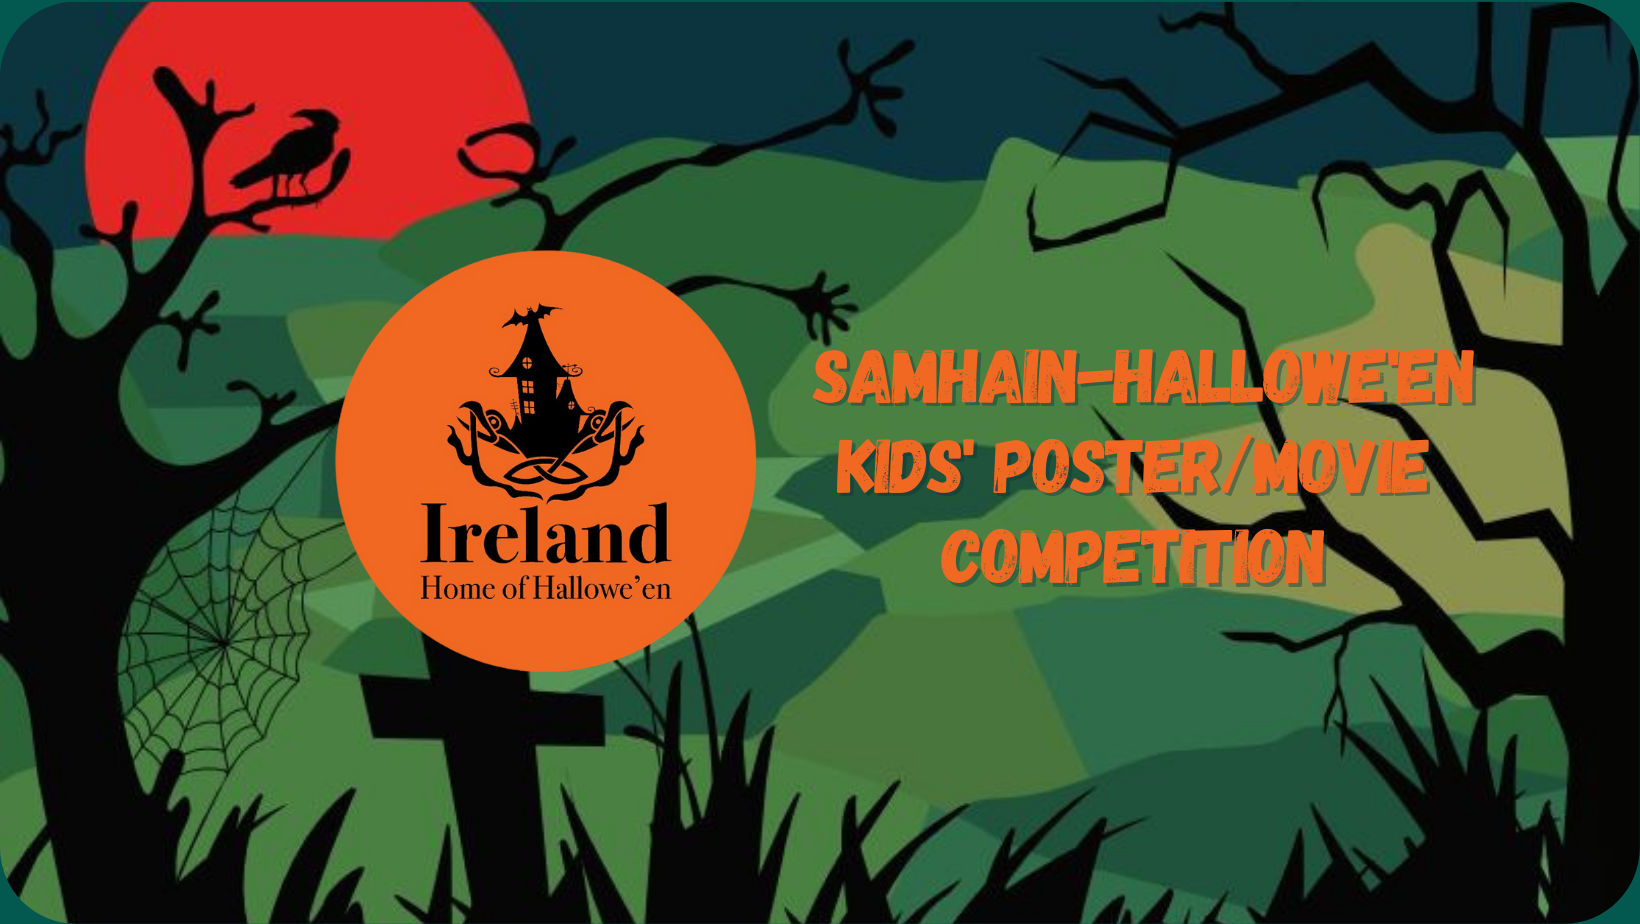 Samhain-Hallowe'en Kids' Poster/Movie Competition